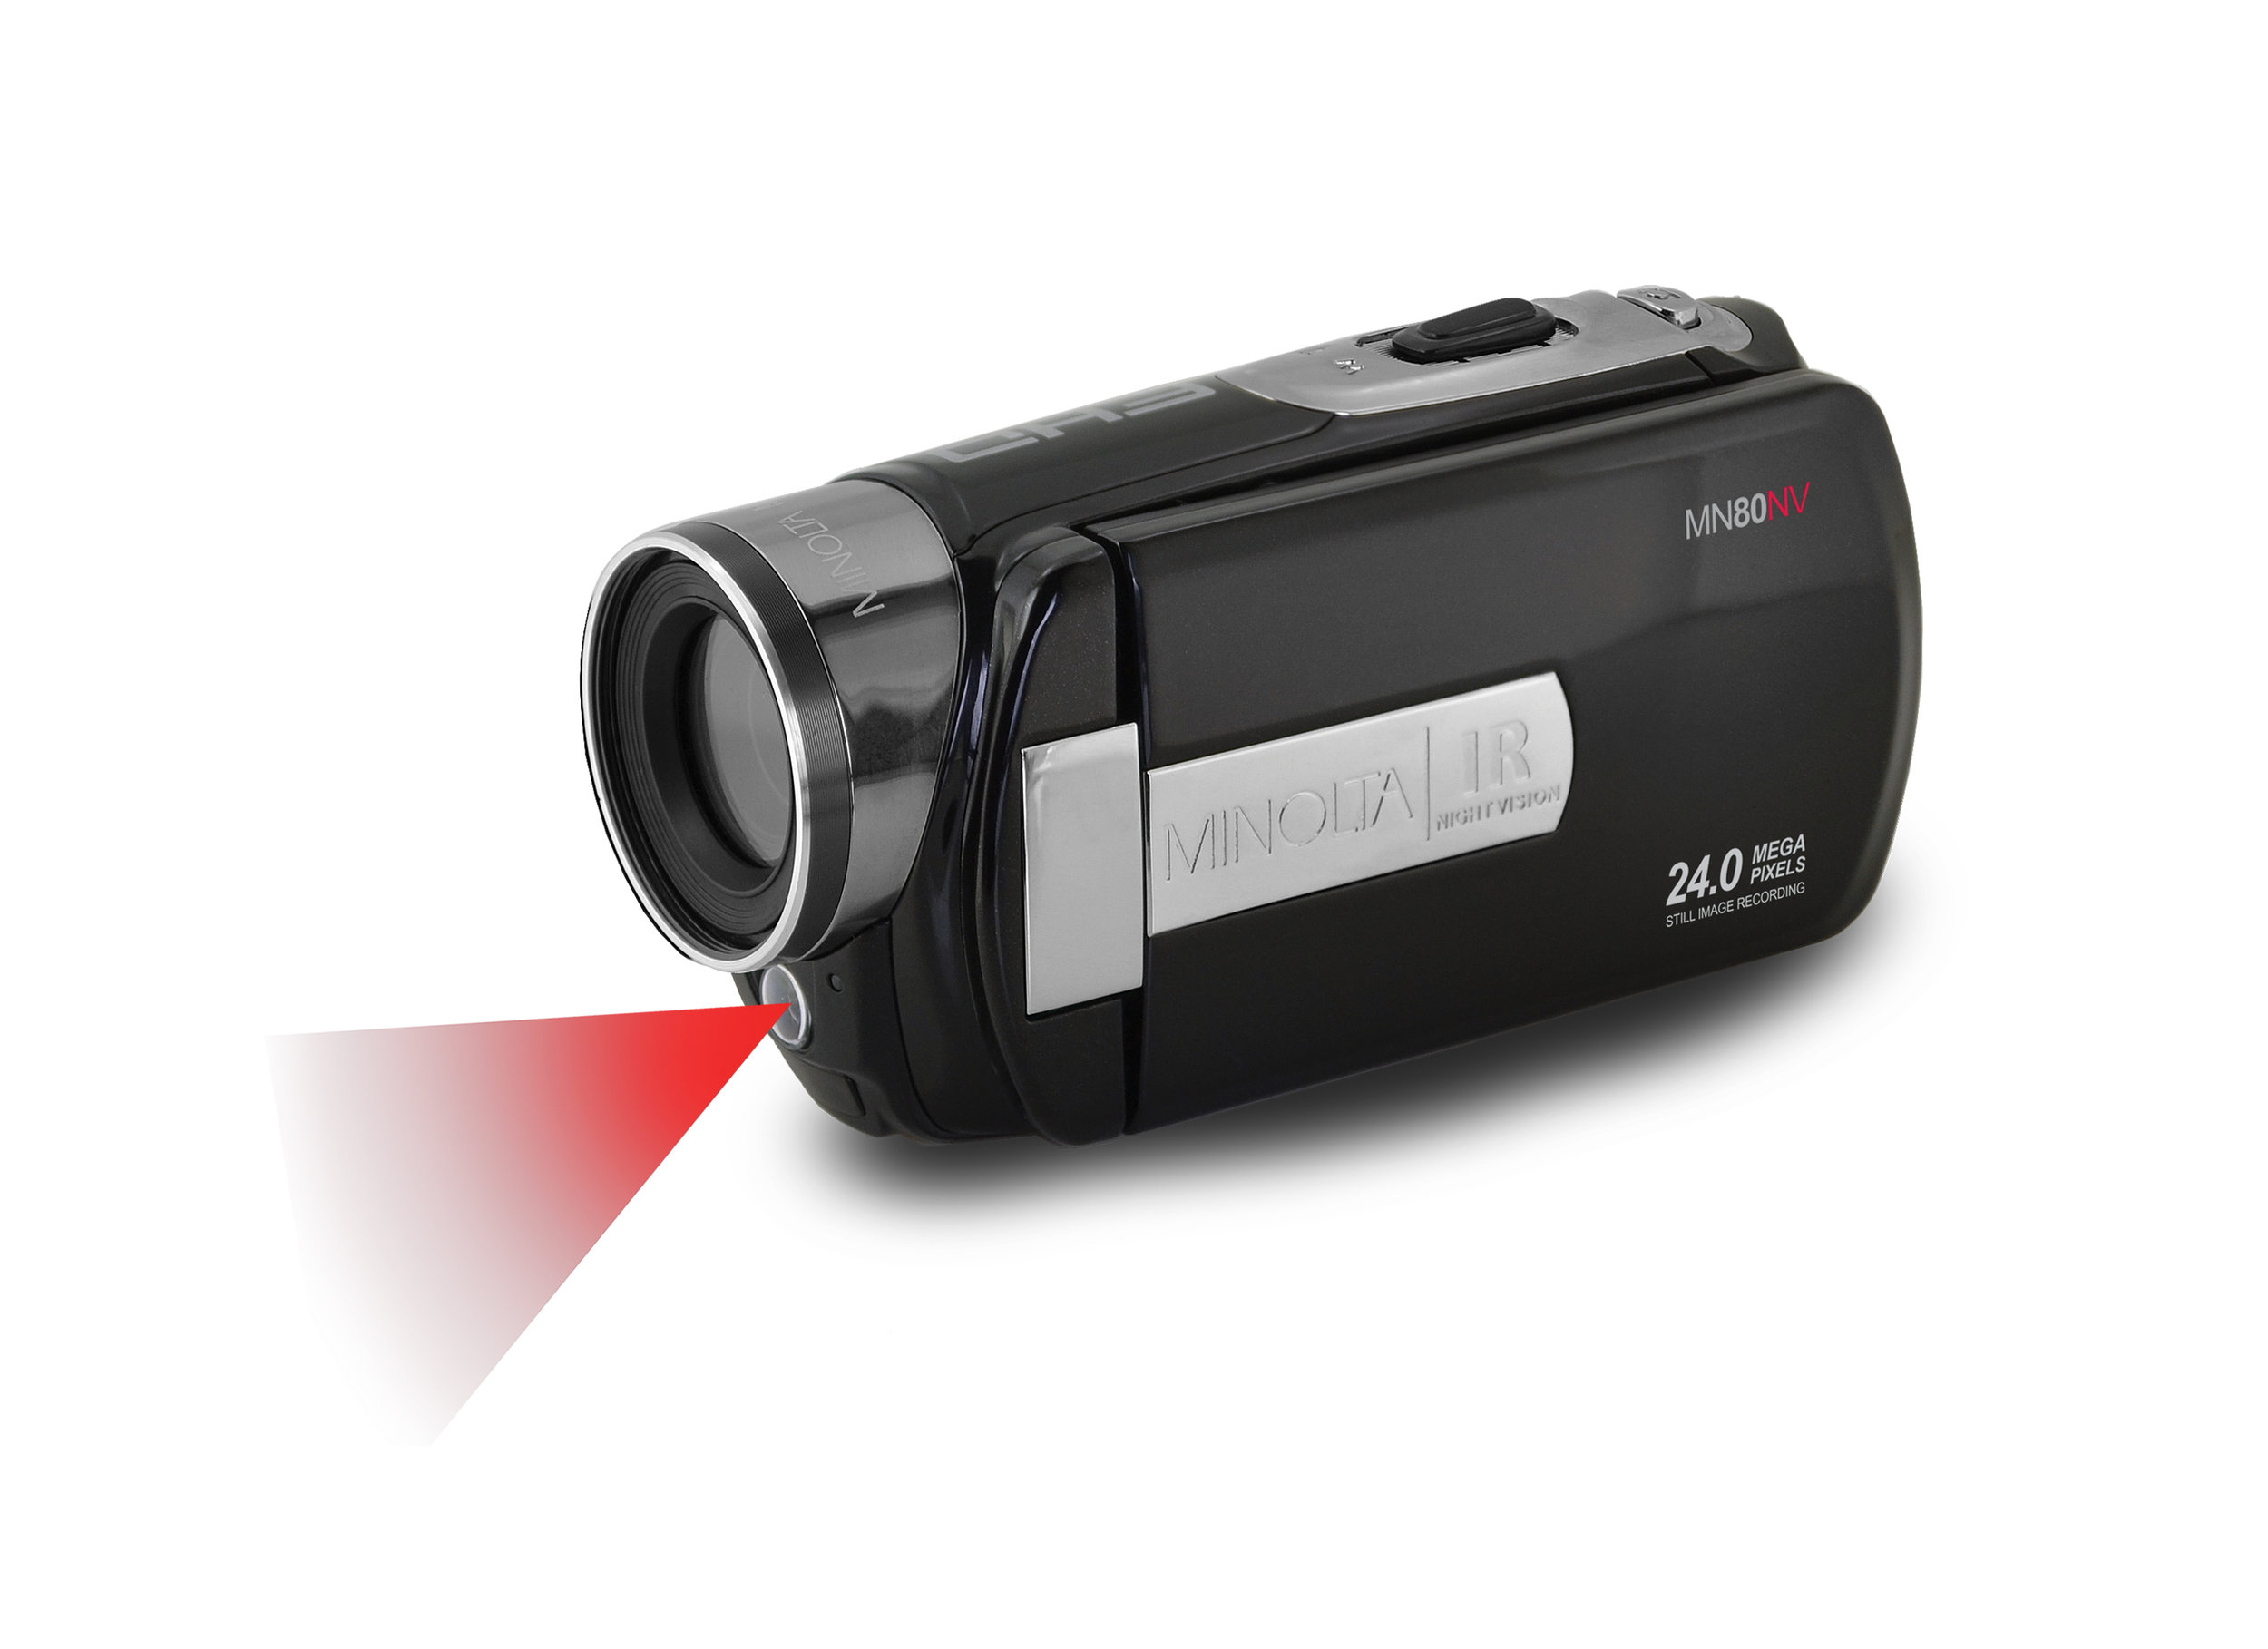 vegetarian comb muscle MN80NV - 1080p Full HD IR Night Vision Camcorder — Minolta Digital